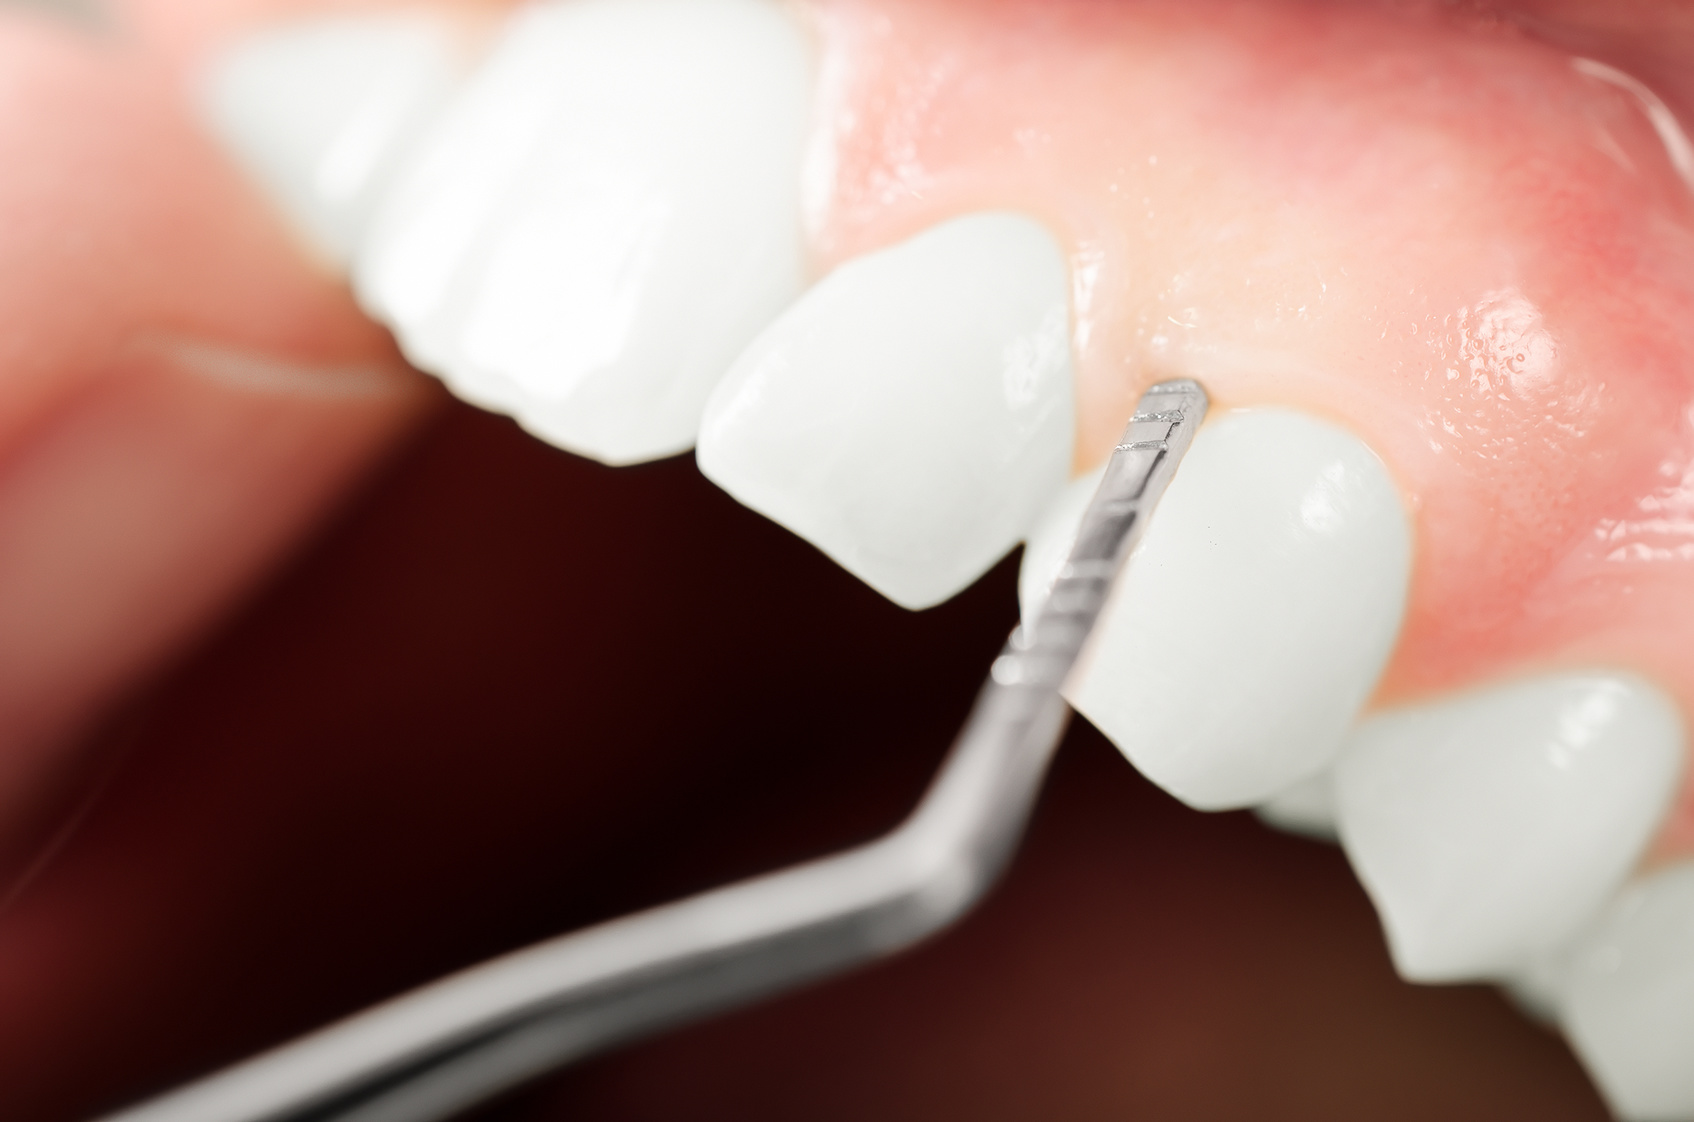 Does Delta Dental Cover Pinhole Surgery?